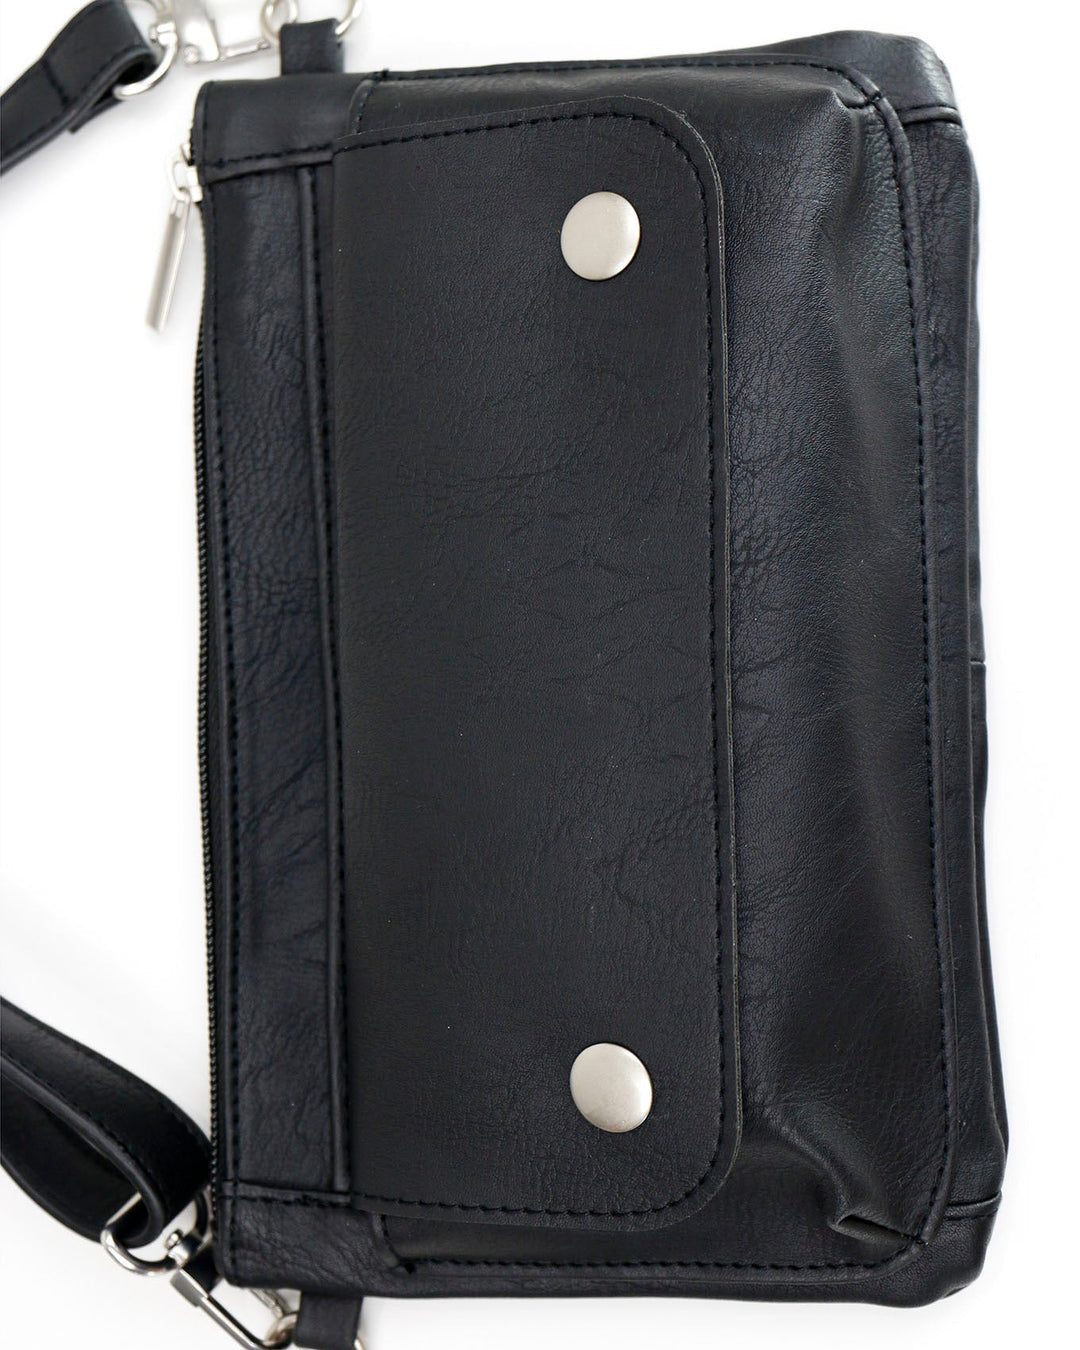 Vegan Leather Essentials Belt Bag in Black by Grace & Lace